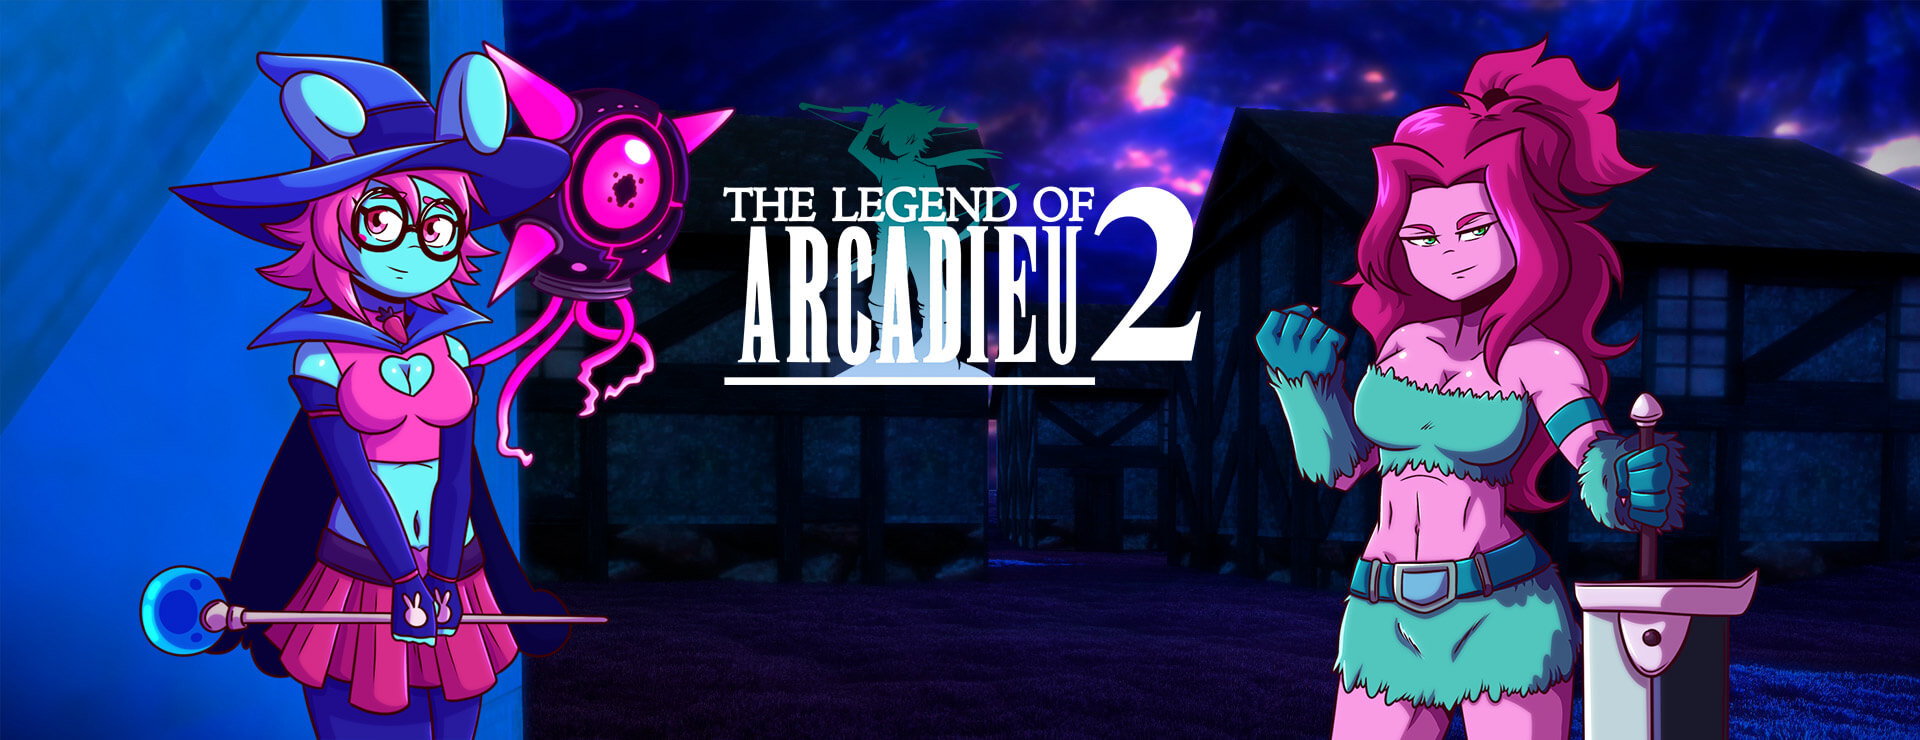 The Legend of Arcadieu 2 - RPG Jeu